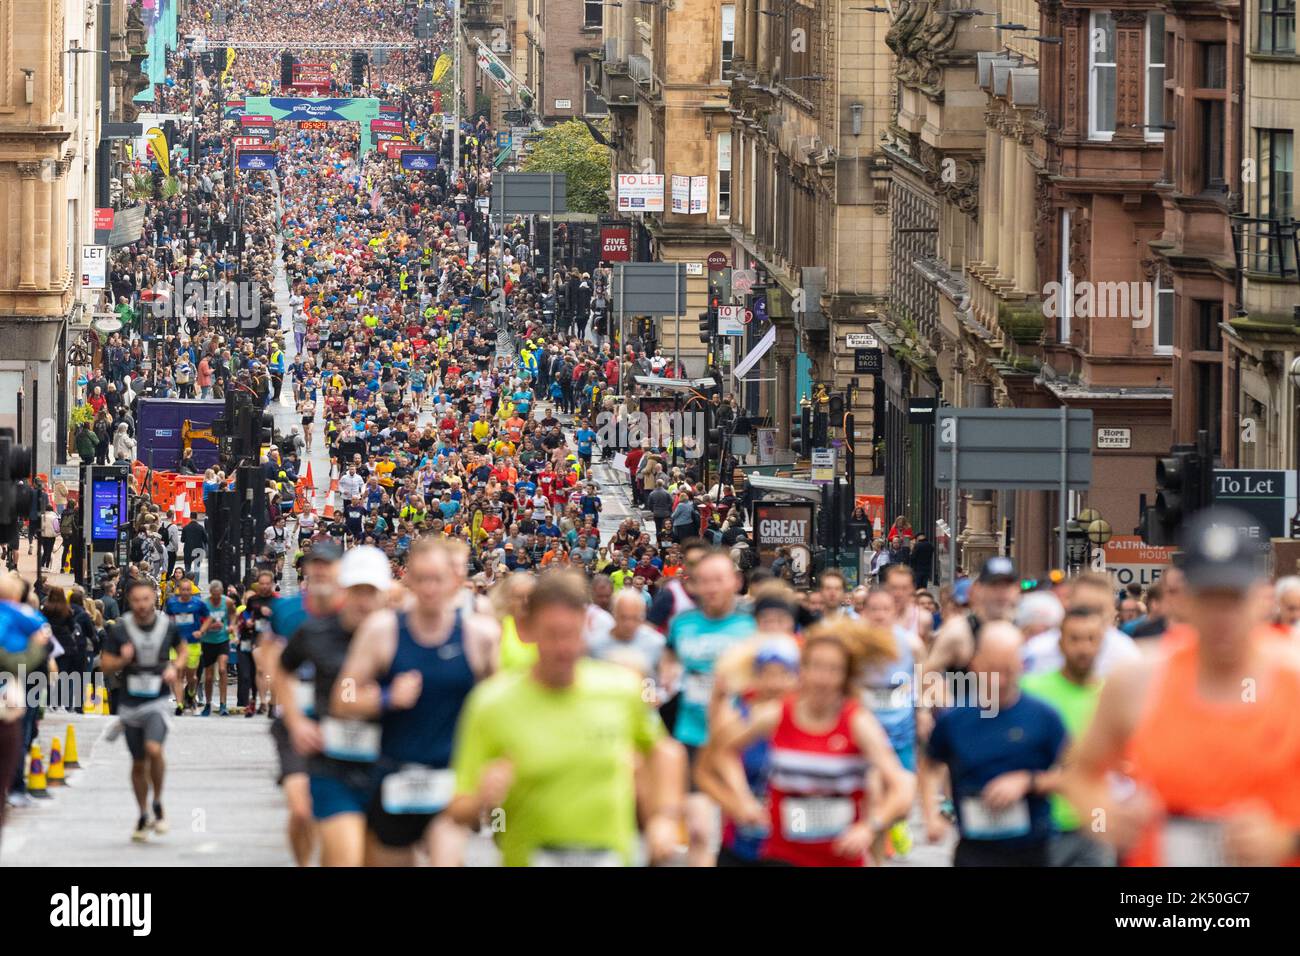 Great Scottish Run half marathon runners in Glasgow, Scotland, UK